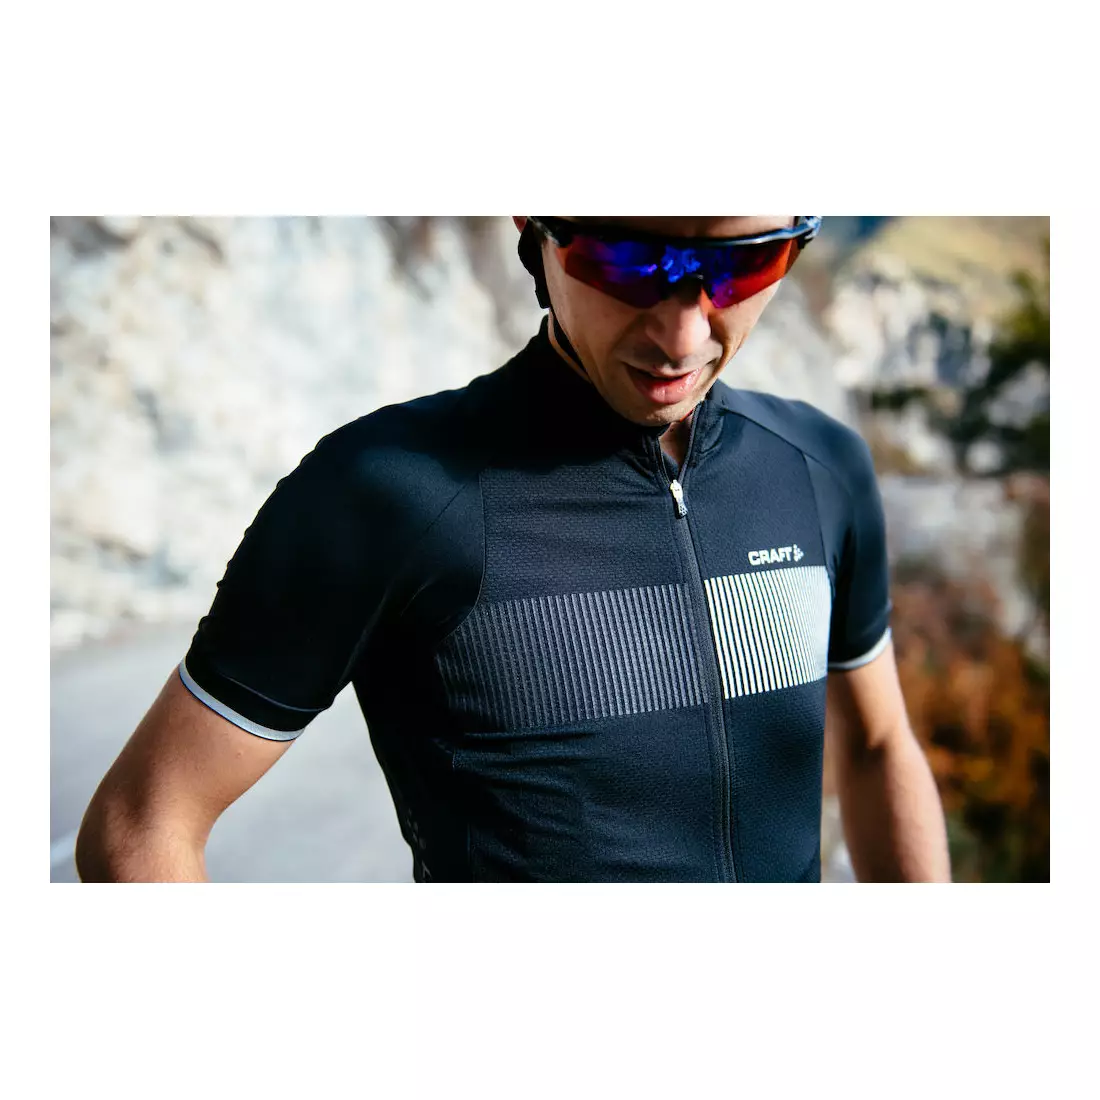 CRAFT Verve Glow 1904995-9999 - men's cycling jersey